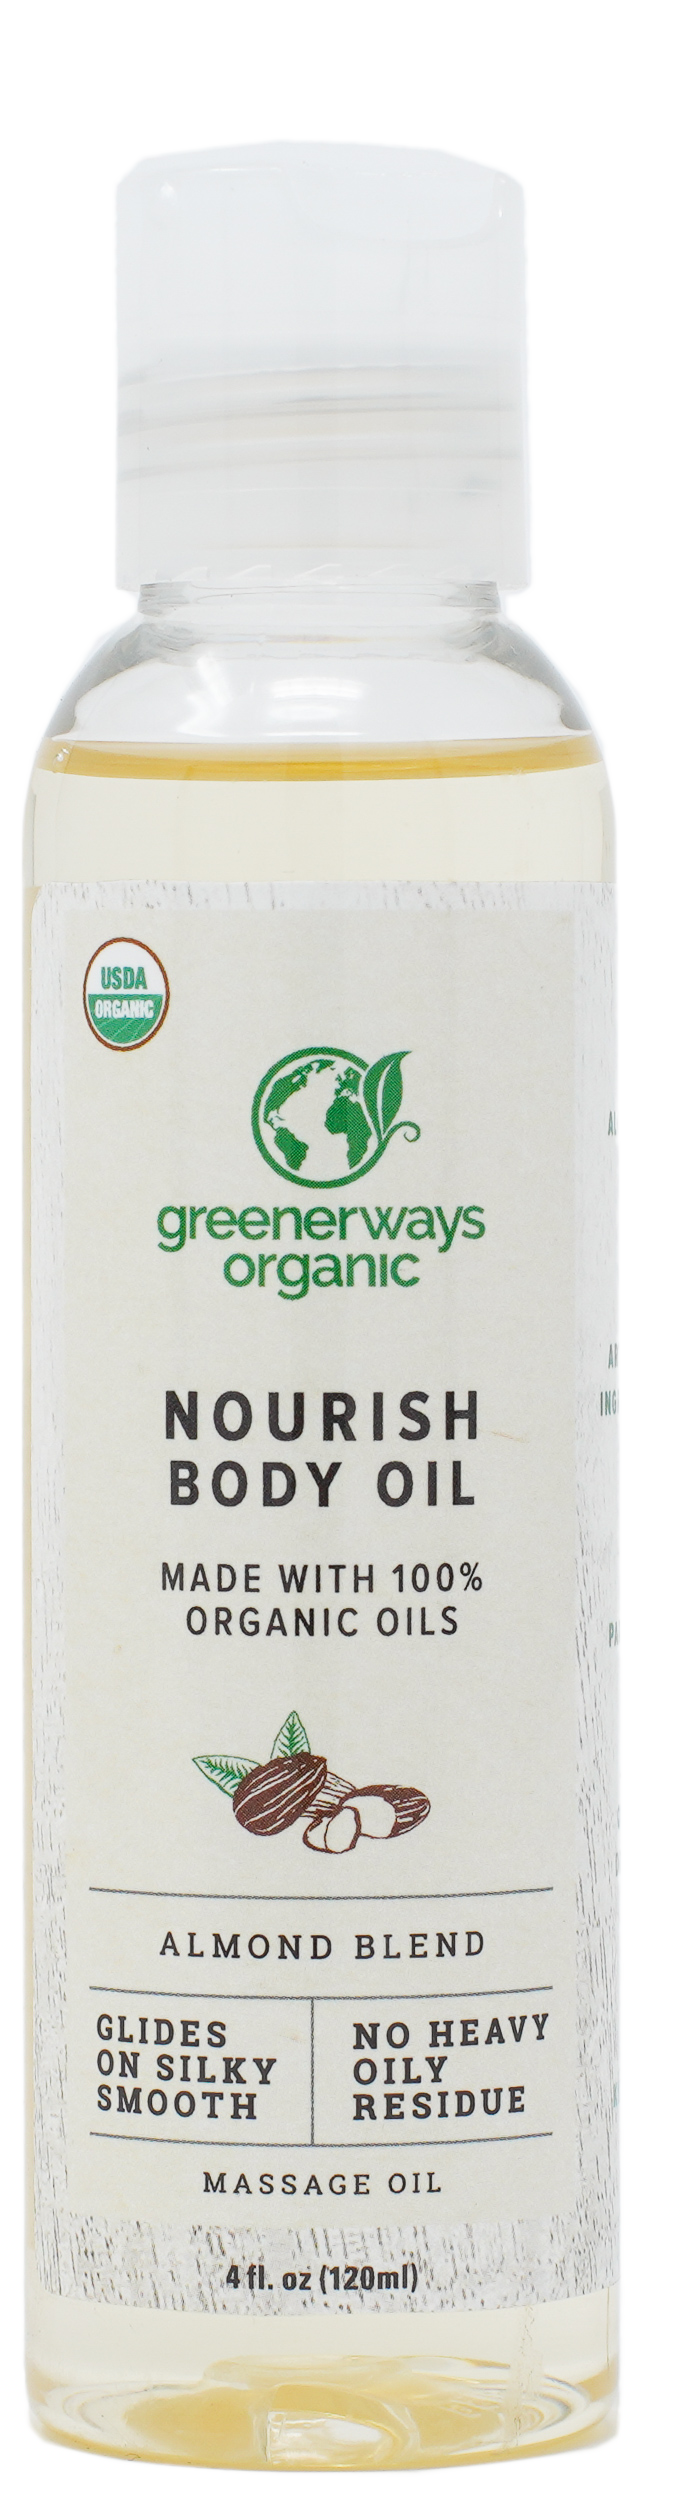 Greenerways Organic Nourish Body Oil (4oz)